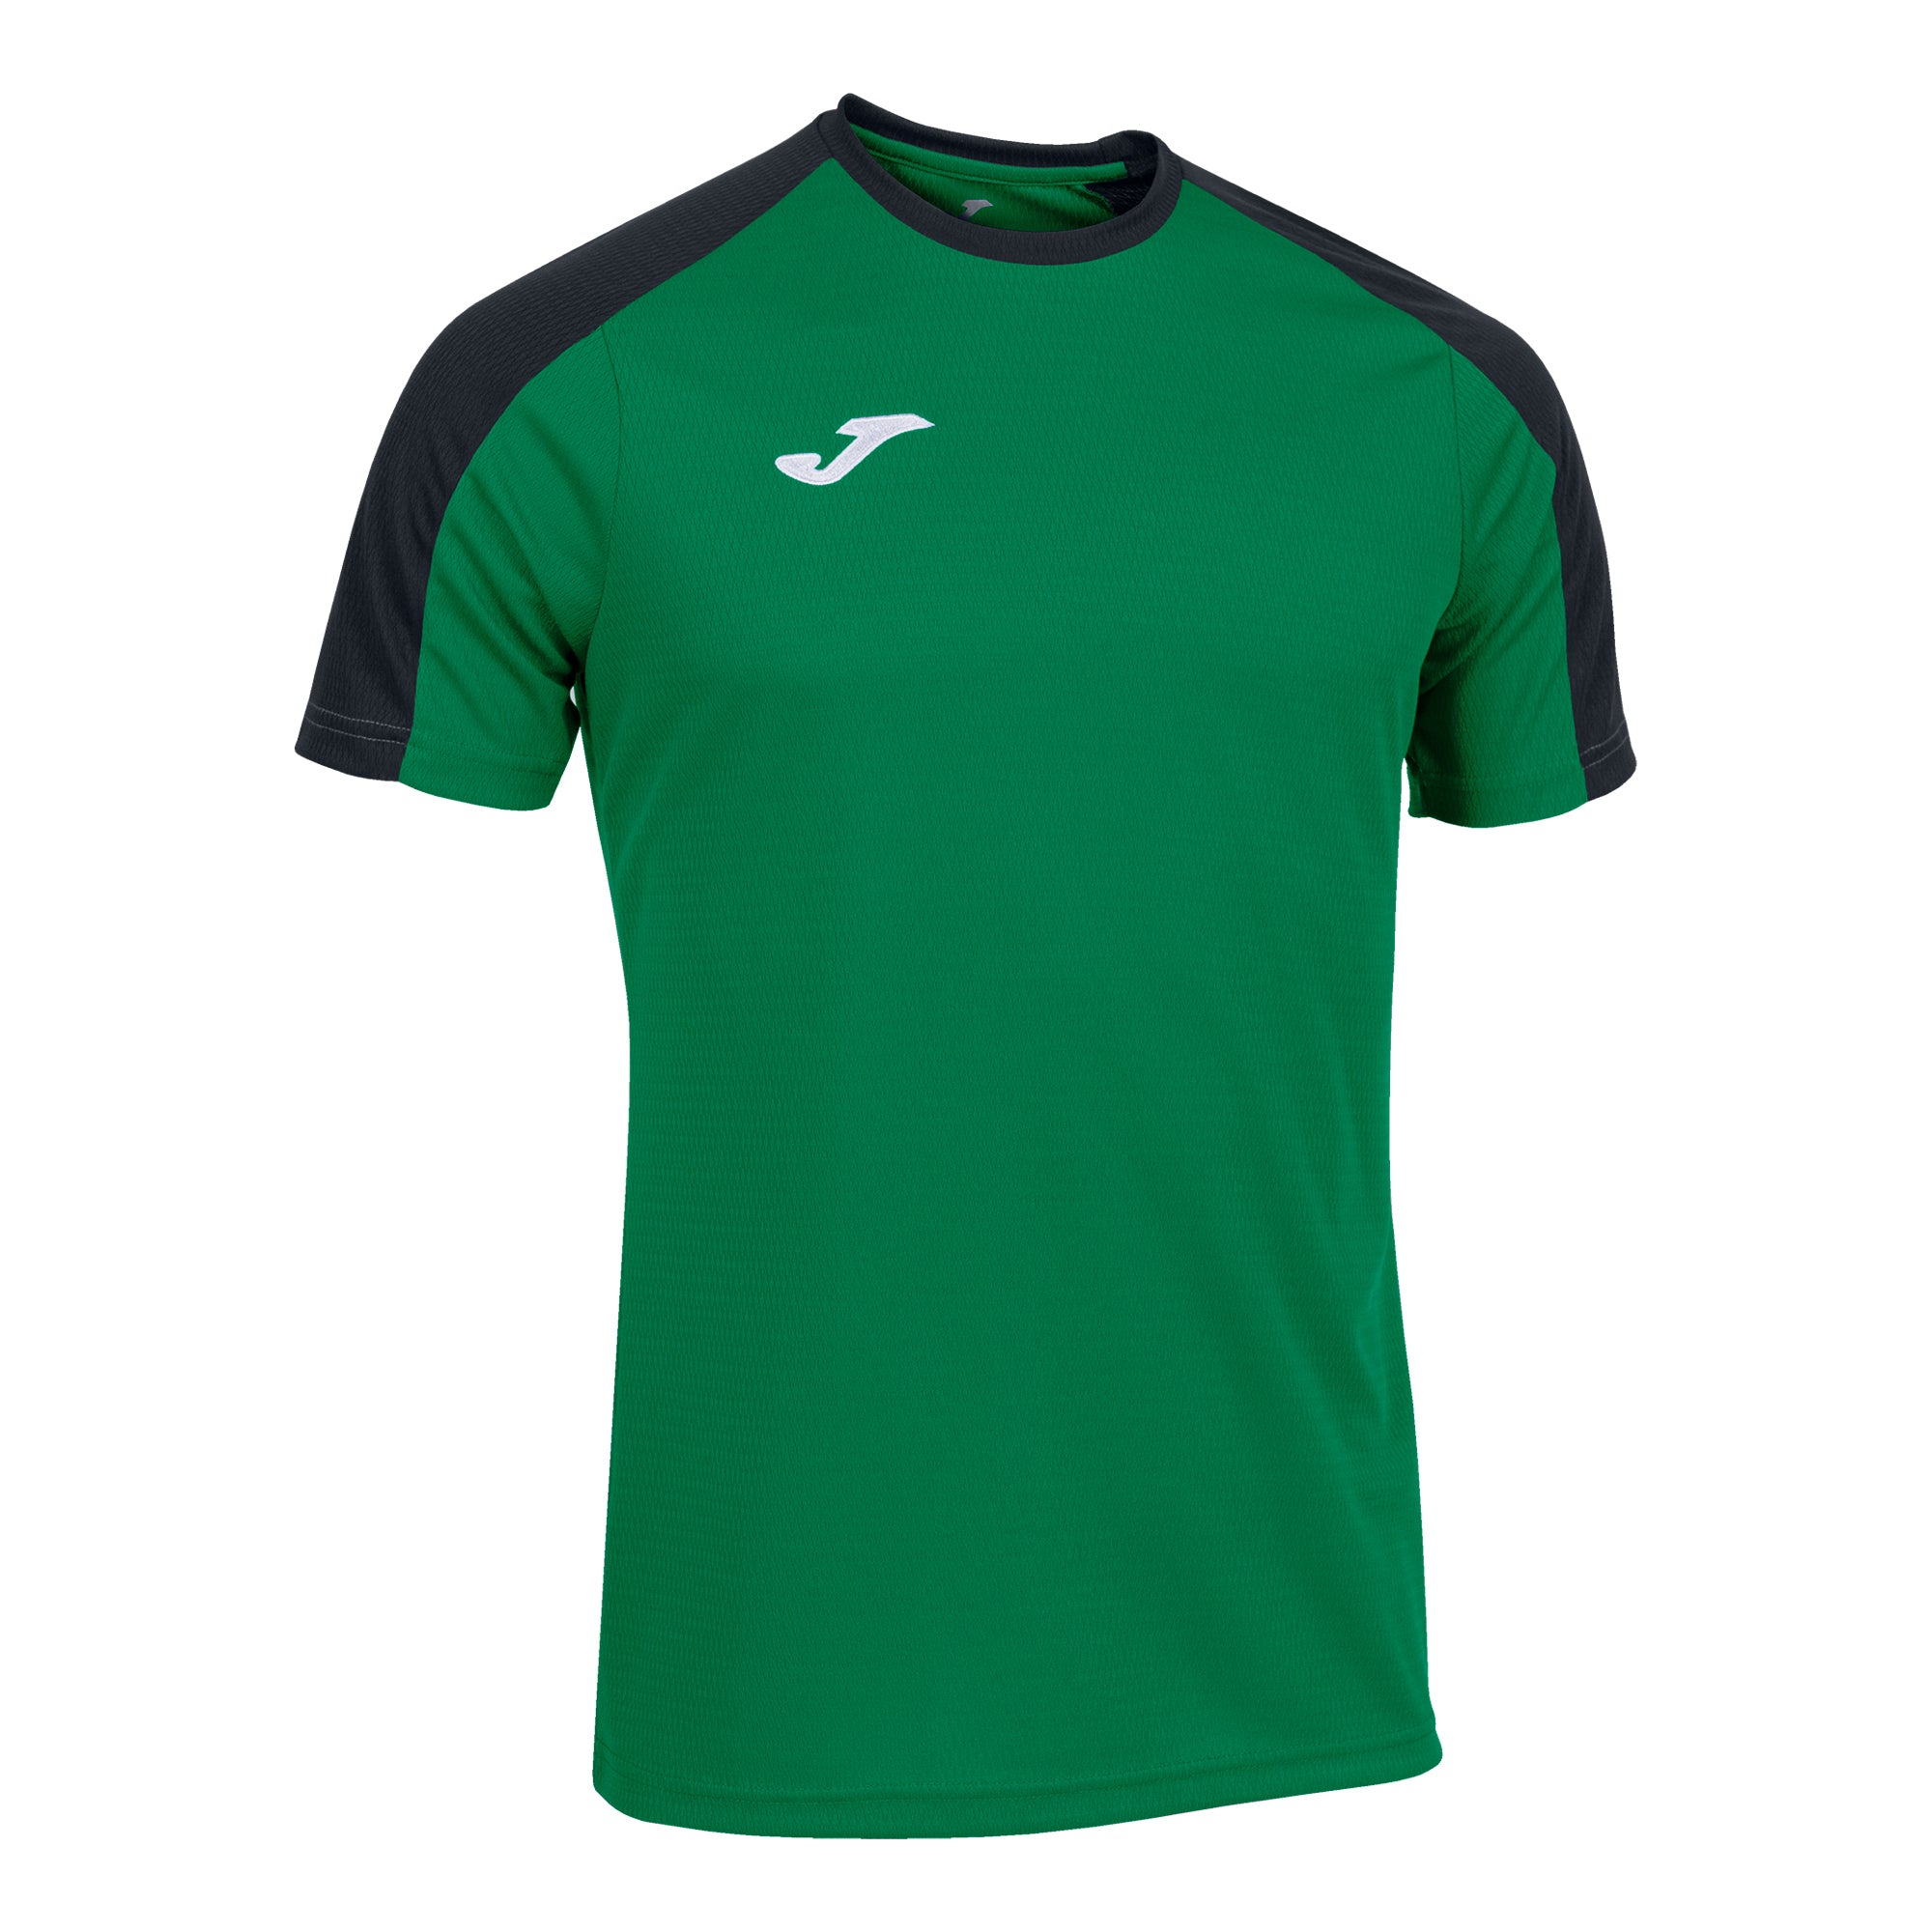 Joma Eco Championship Short Sleeve T-Shirt - Black/Green Fluor